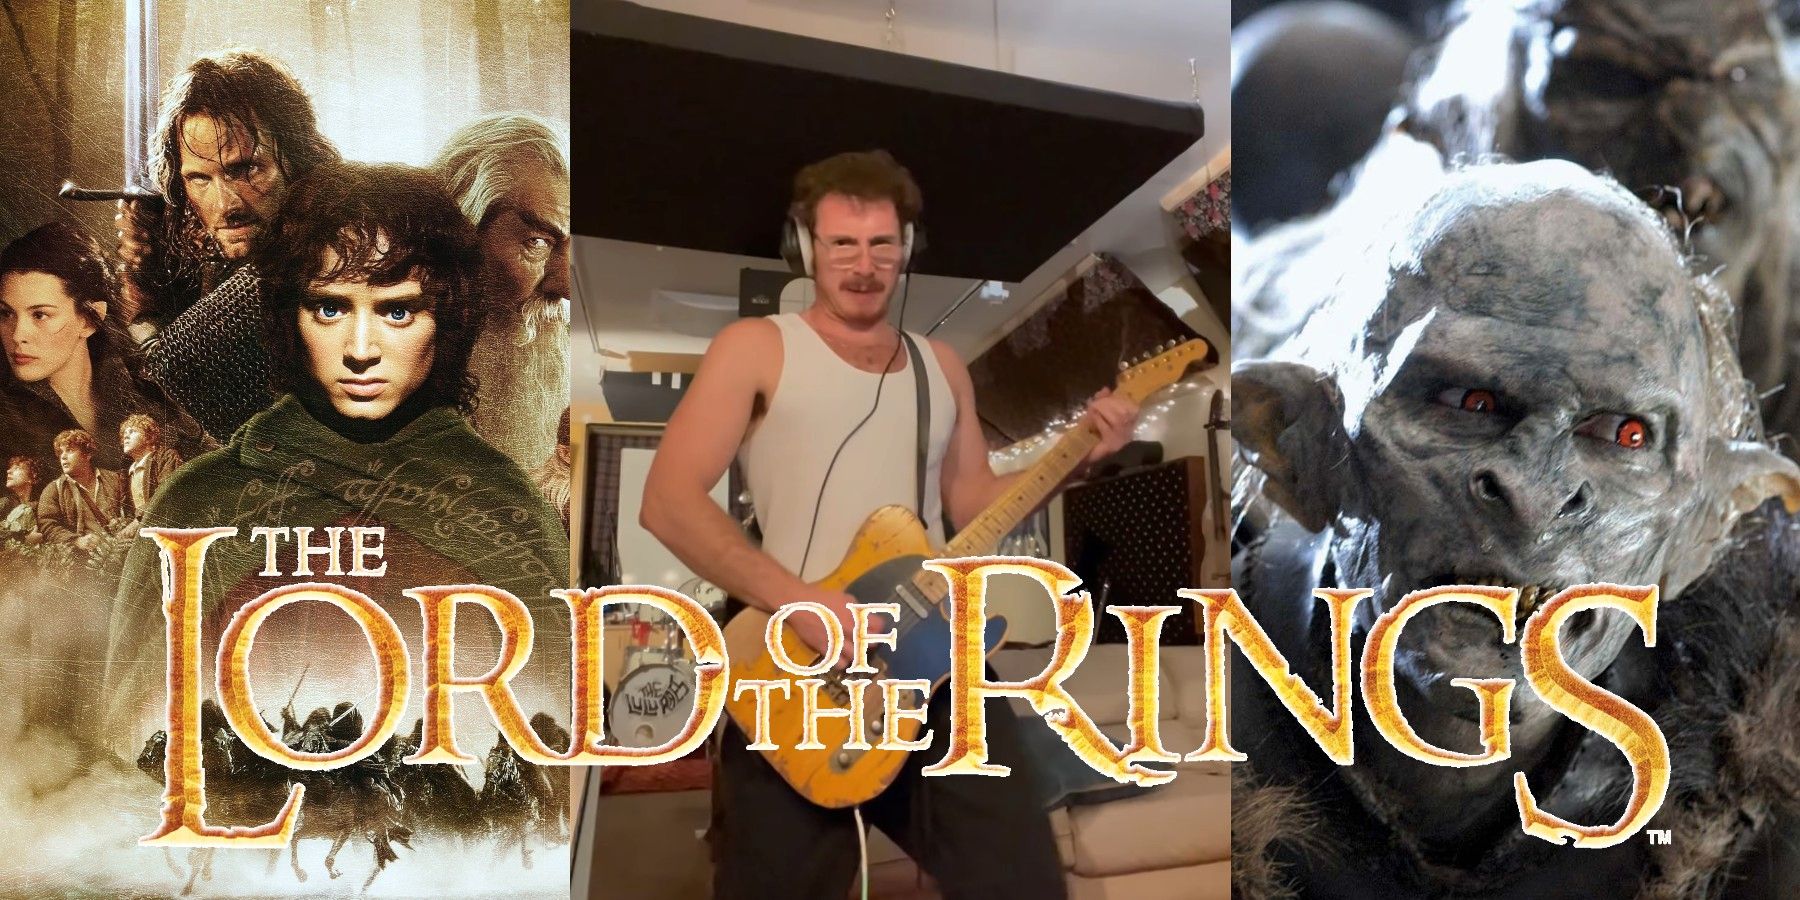 Muzikant vat het plot van Fellowship of the Ring samen in één hilarisch nummer